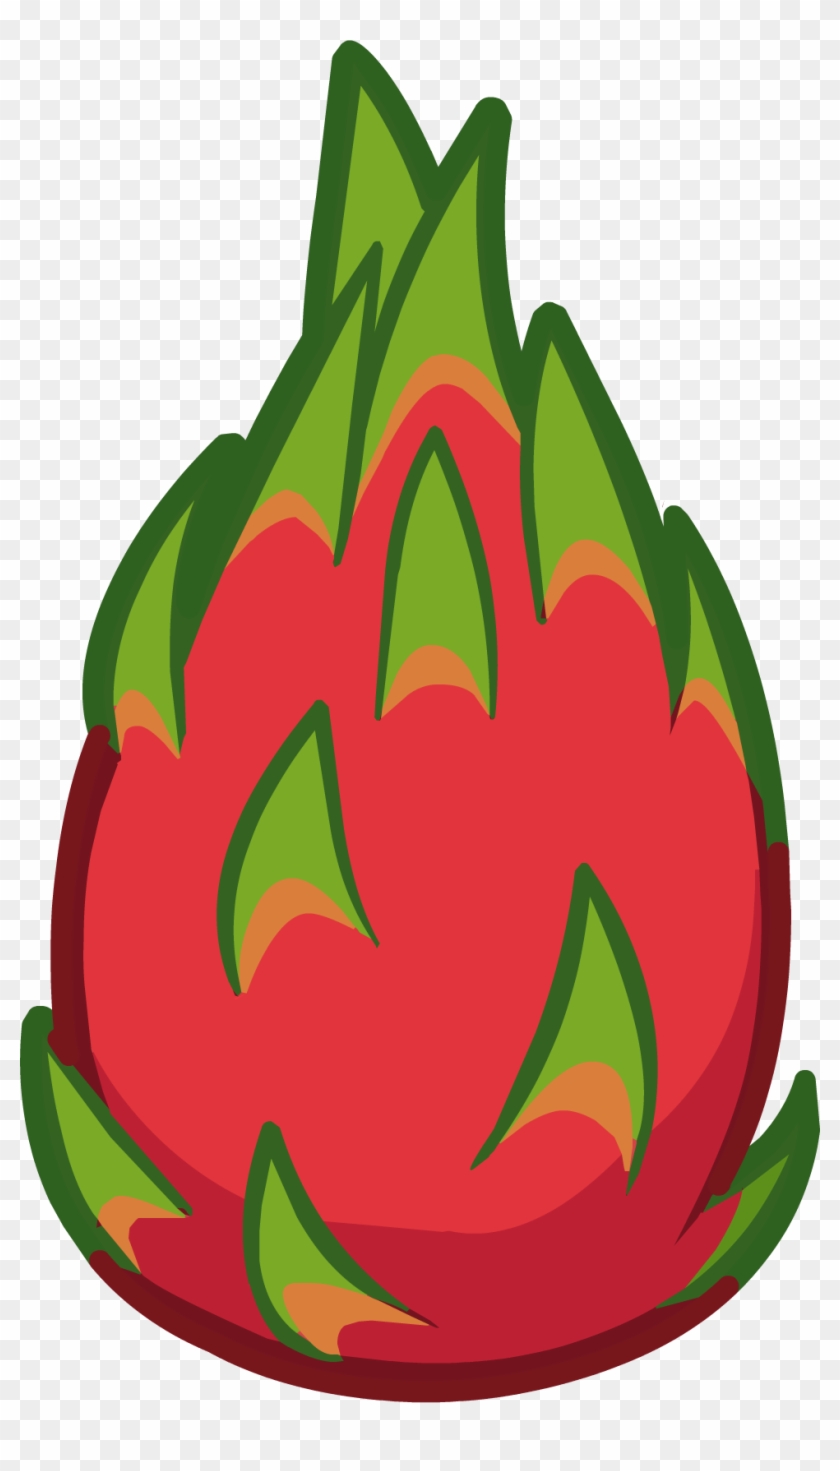 10 Dragon Fruits - Dragon Fruit Clip Art Png #242710